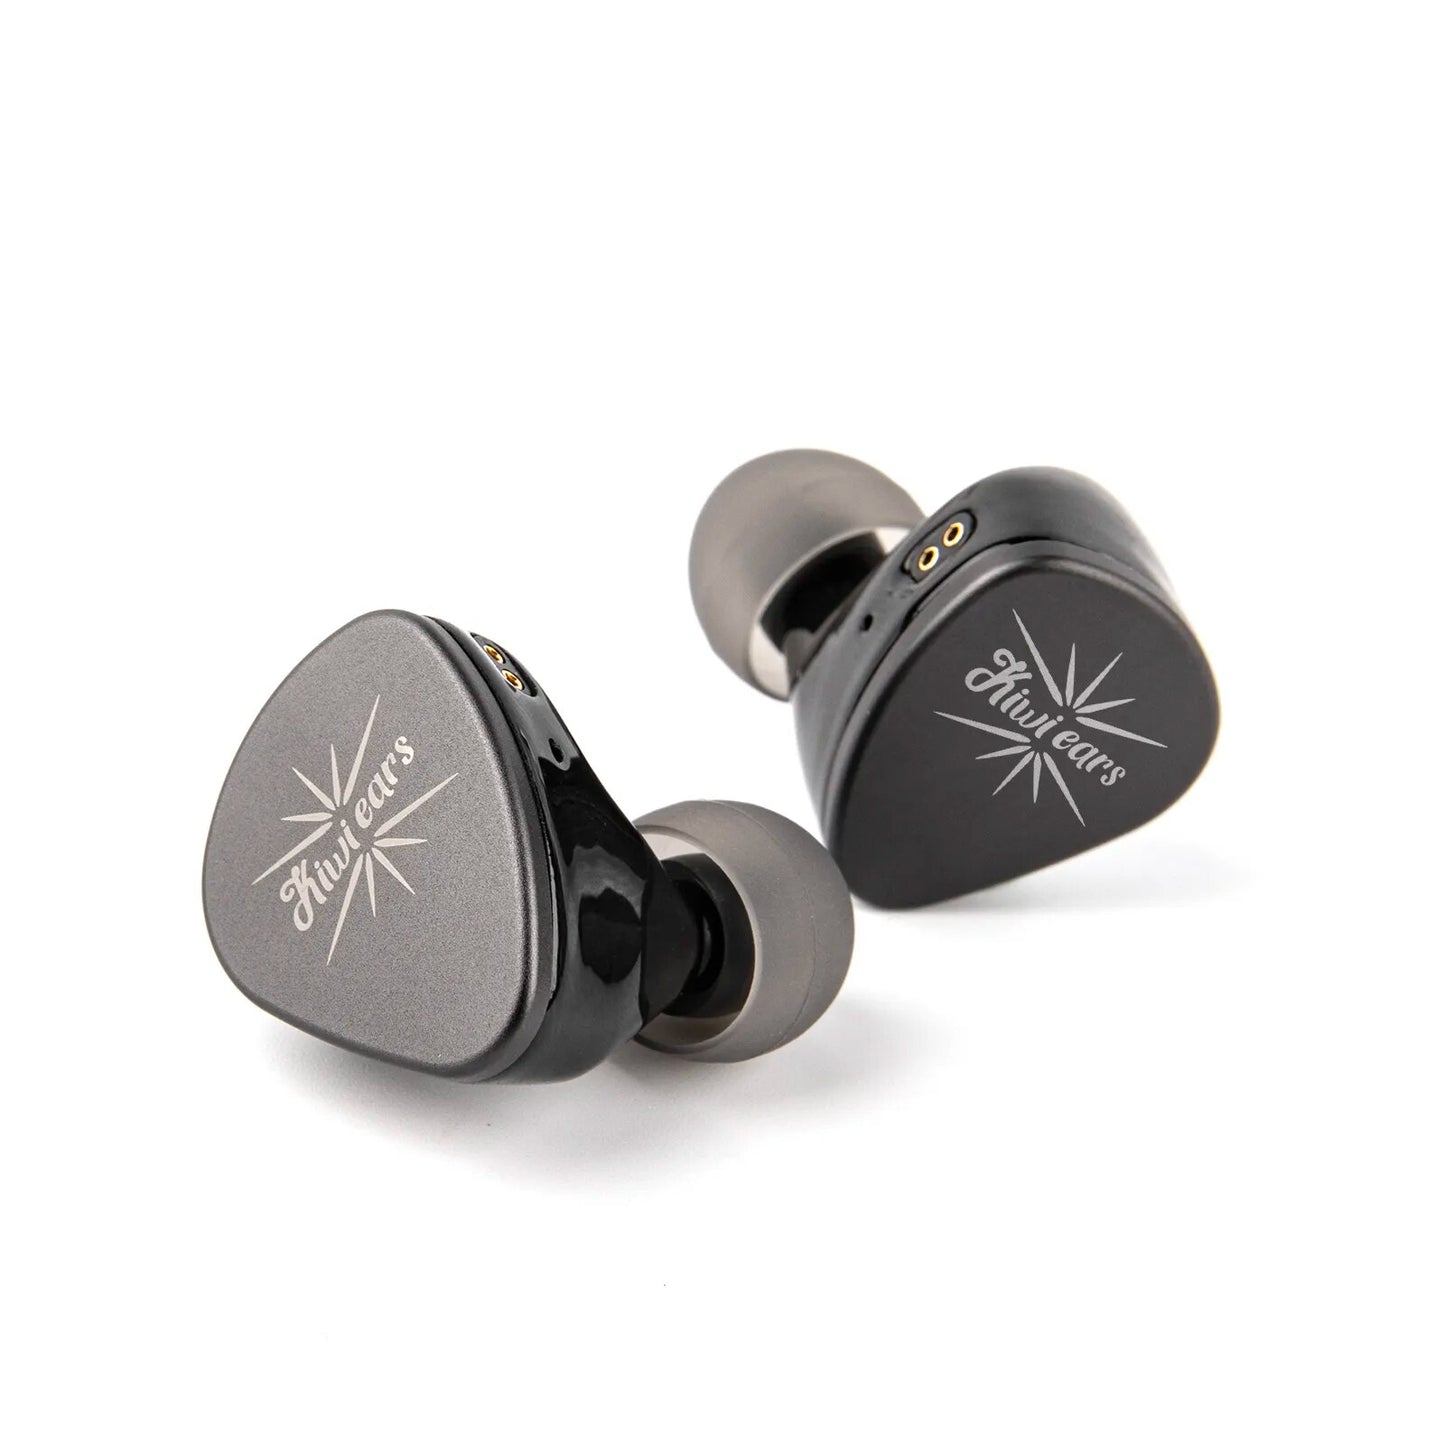 Kiwi Ears Melody 12mm Planar Driver In Ear Monitor(Pre-Order)